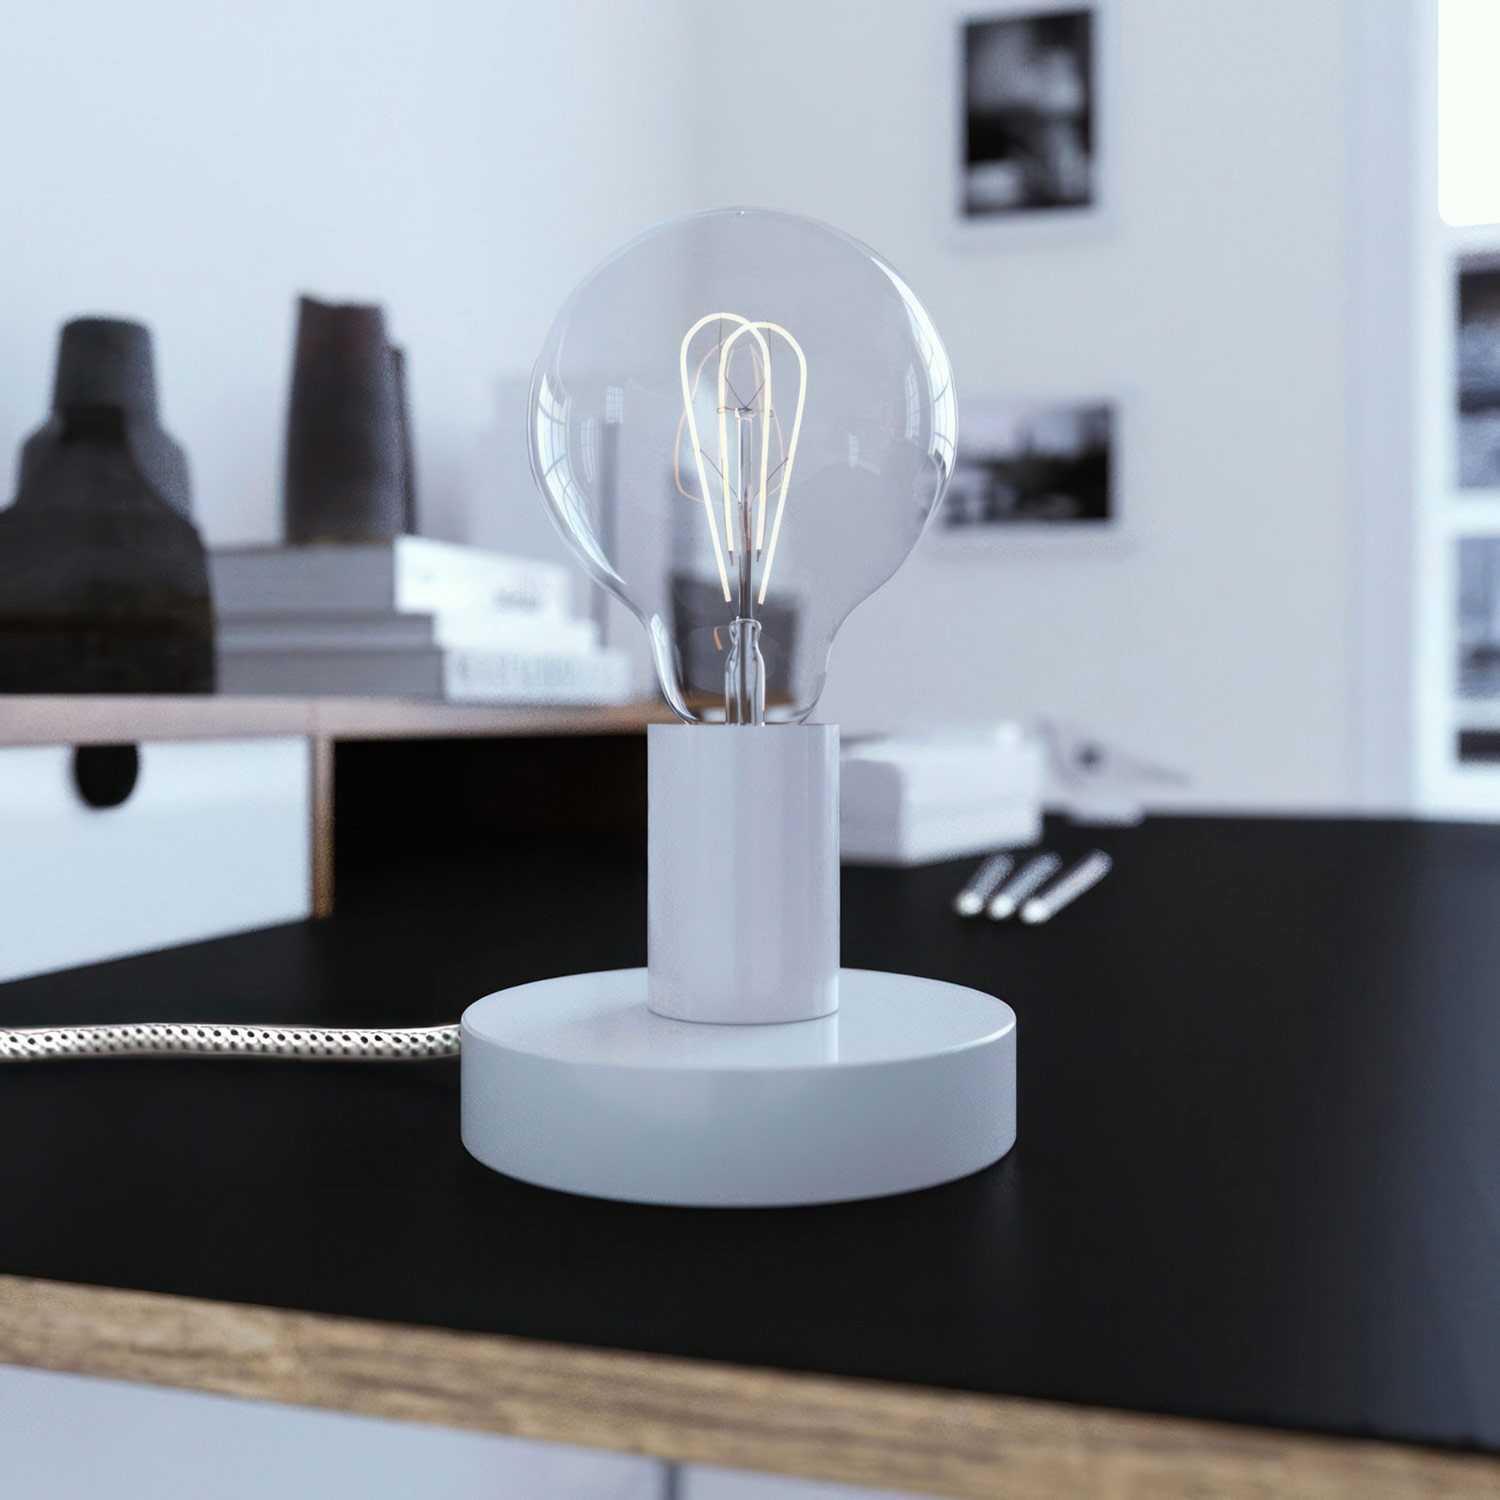 Posaluce - Metal table lamp with UK plug